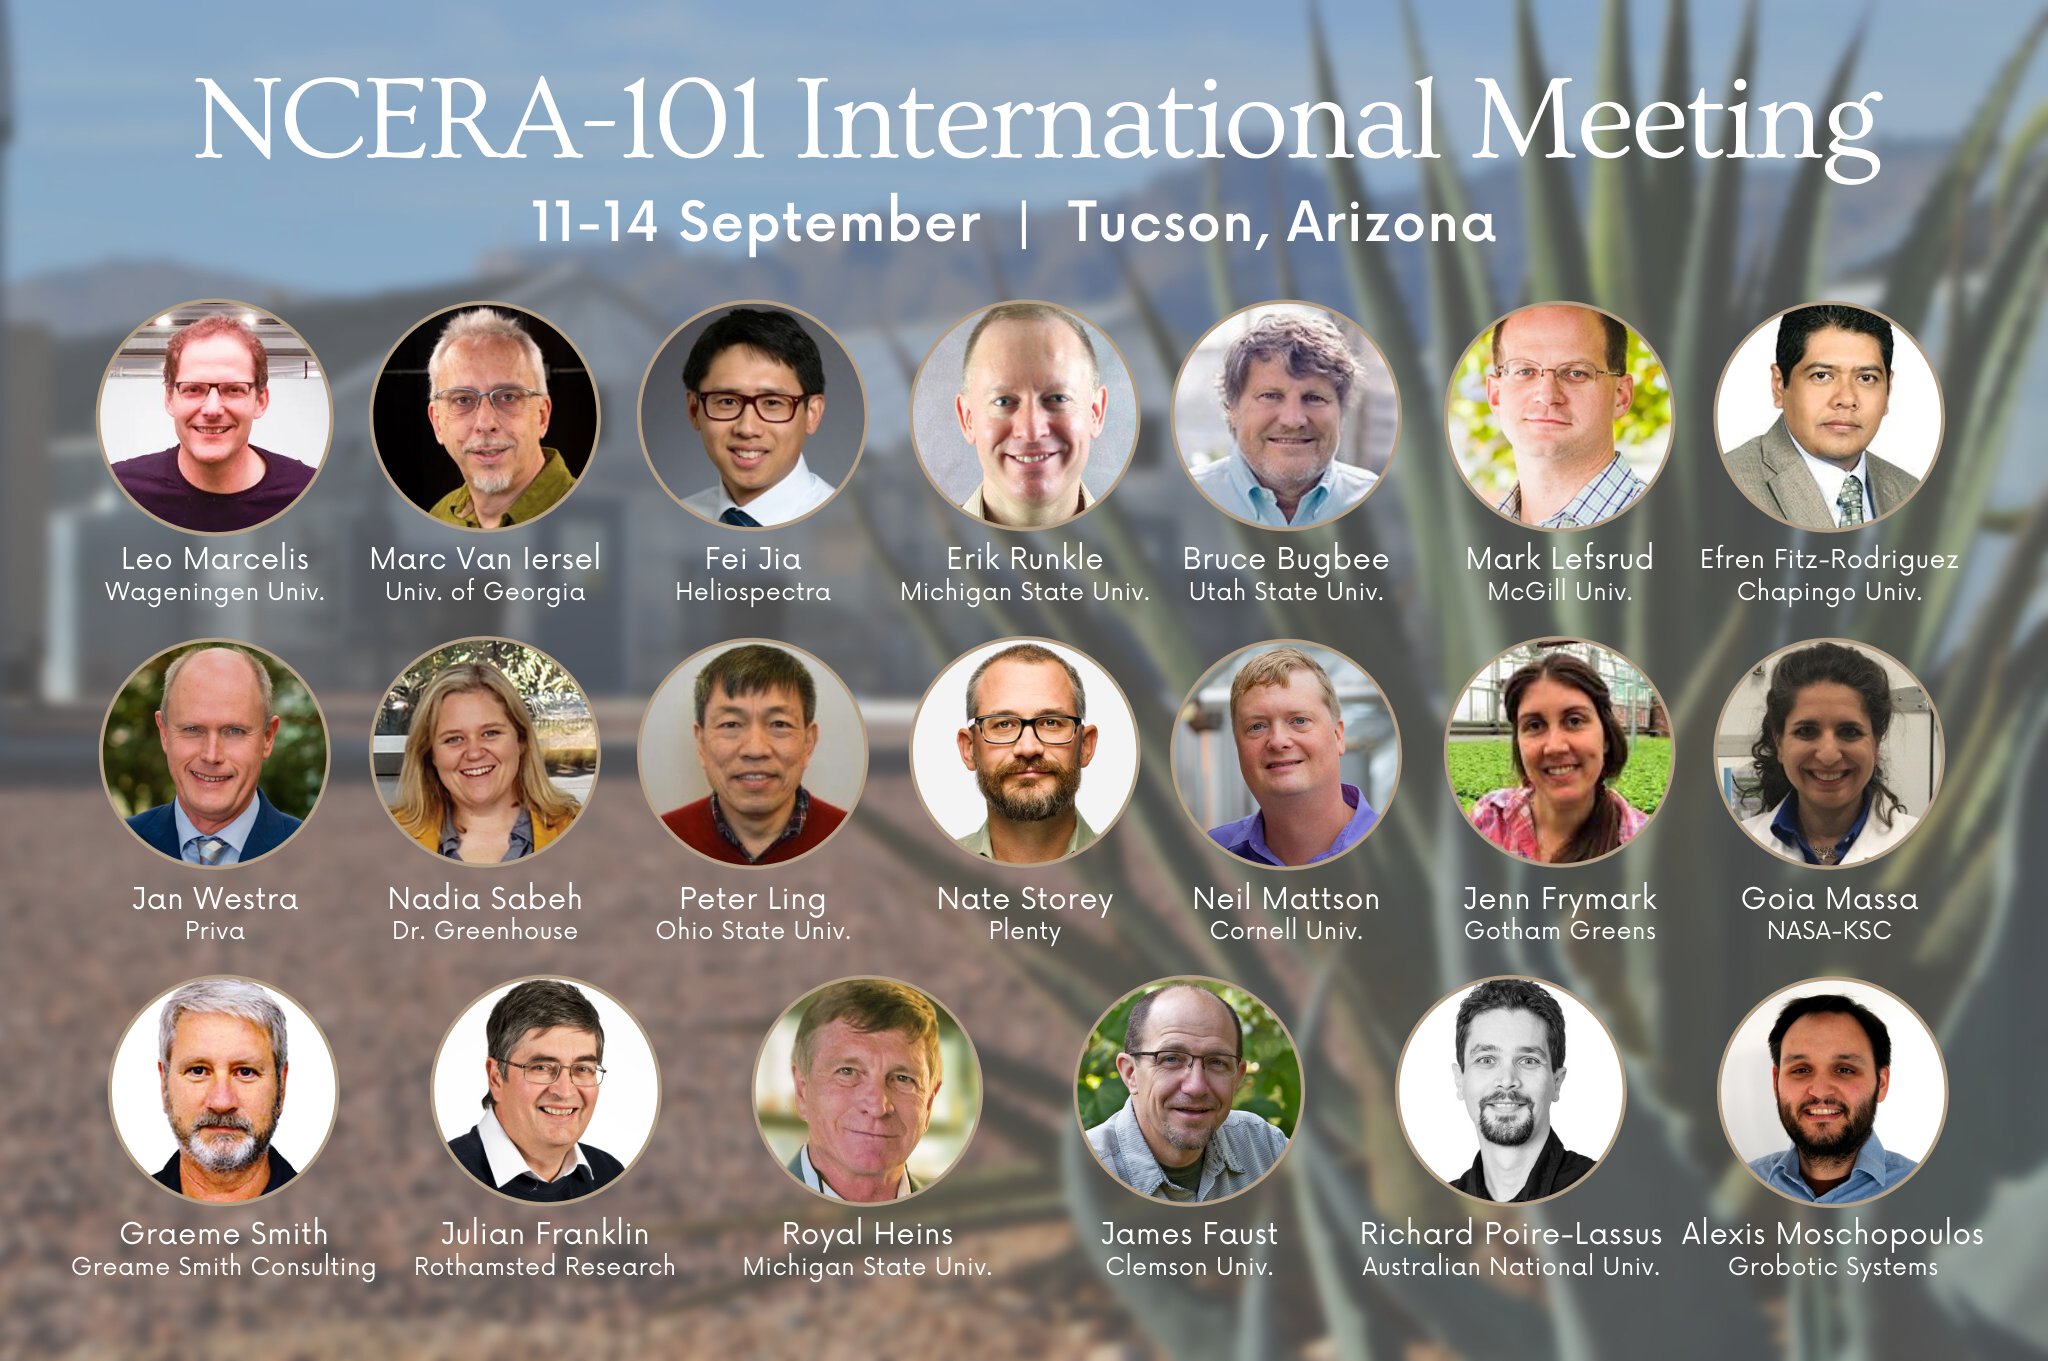 NCERA-101 International Meeting, 11-14 September, Tucson, Arizona